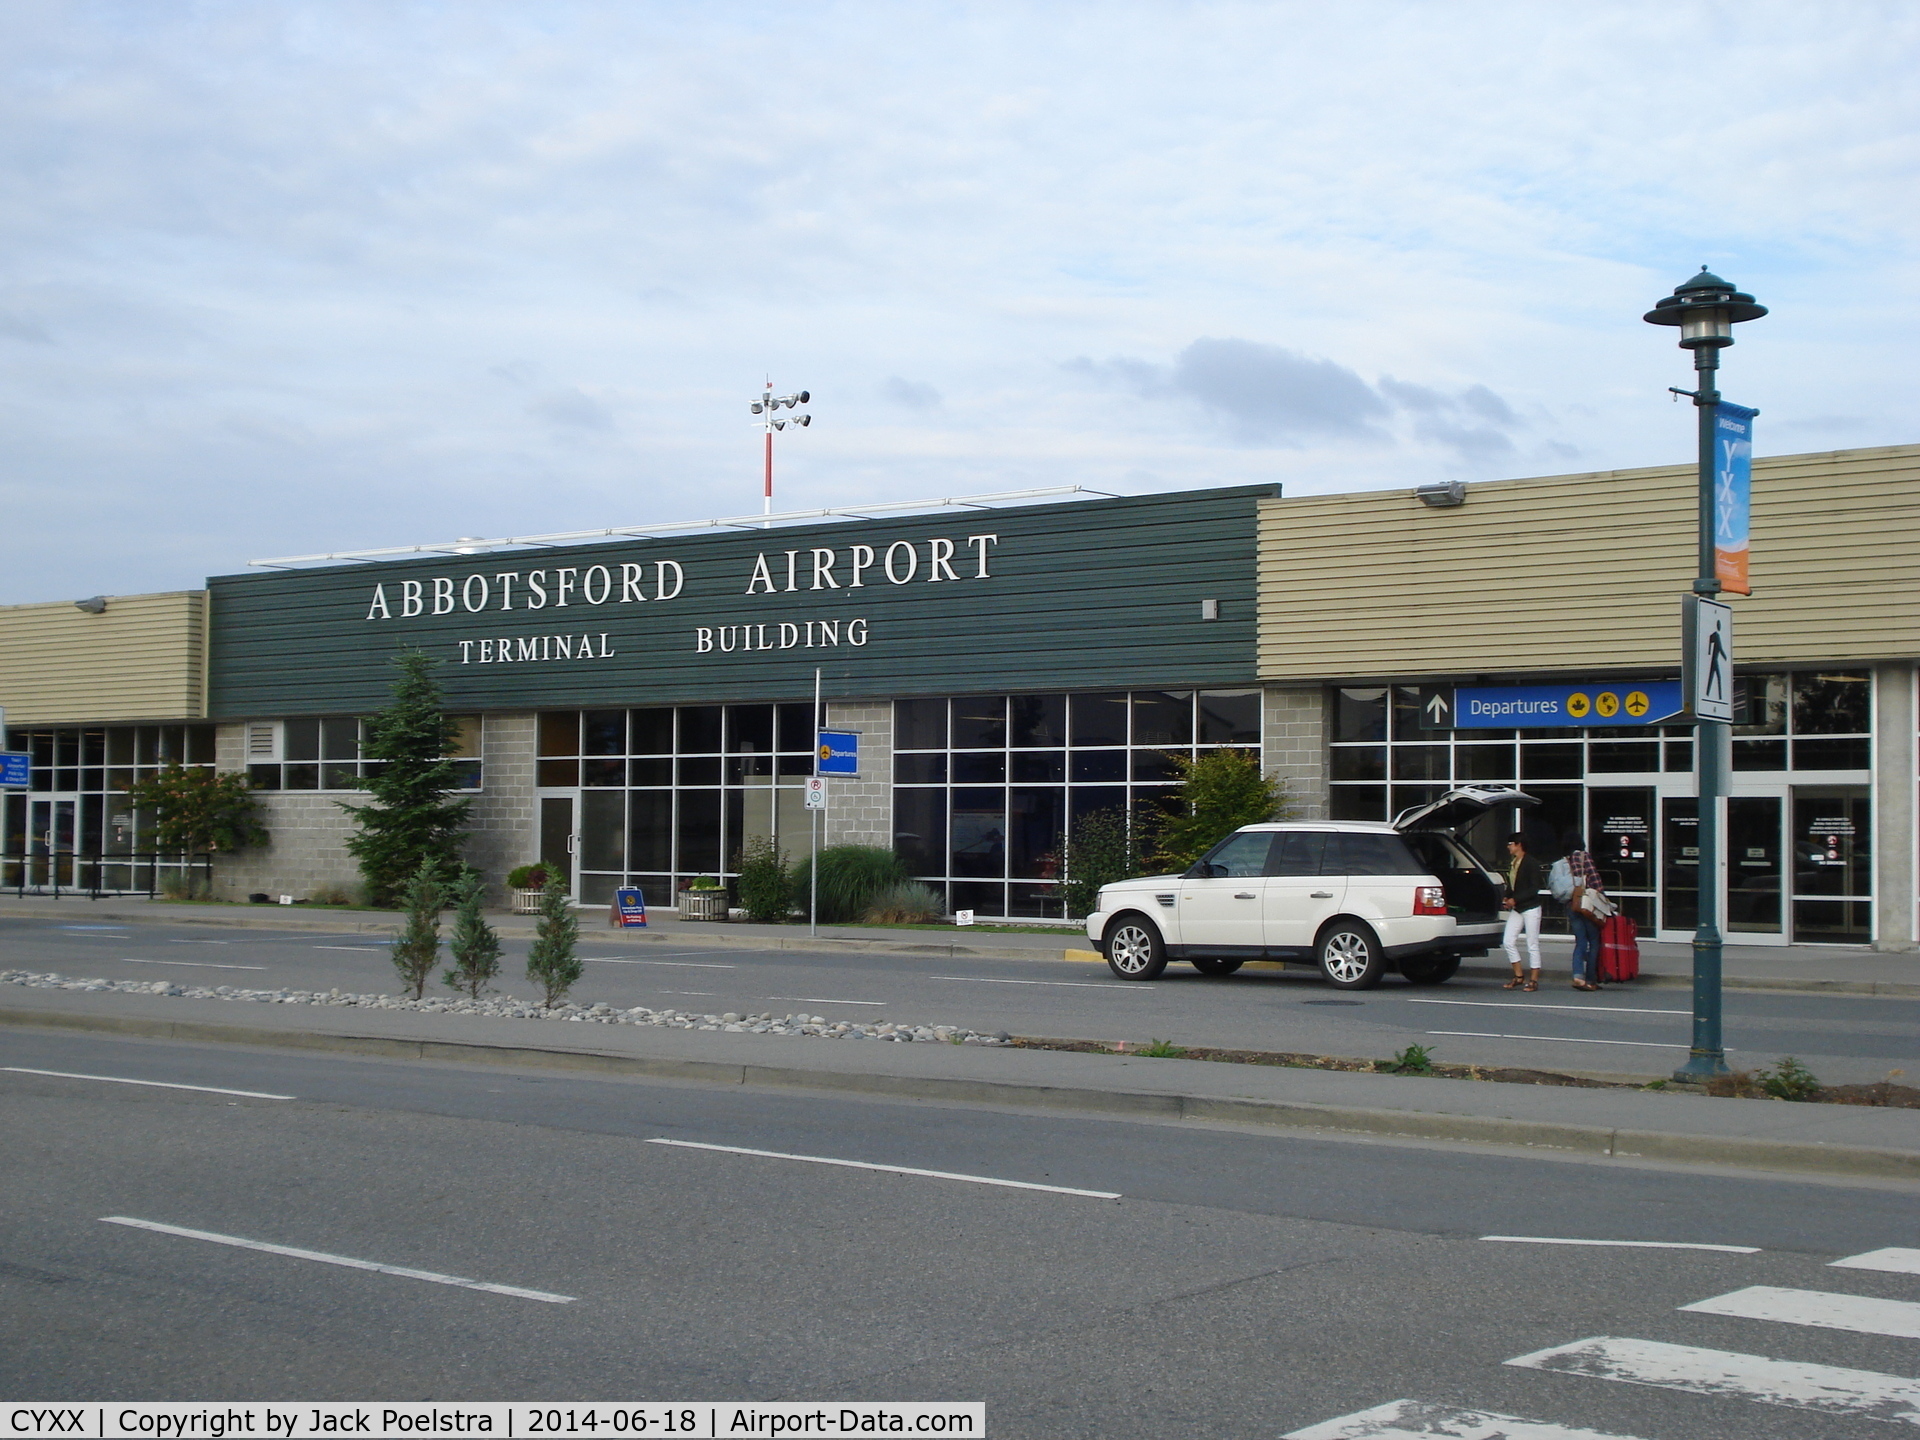 Abbotsford International Airport, Abbotsford, British Columbia Canada (CYXX) - Terminal of Abbotsford airport